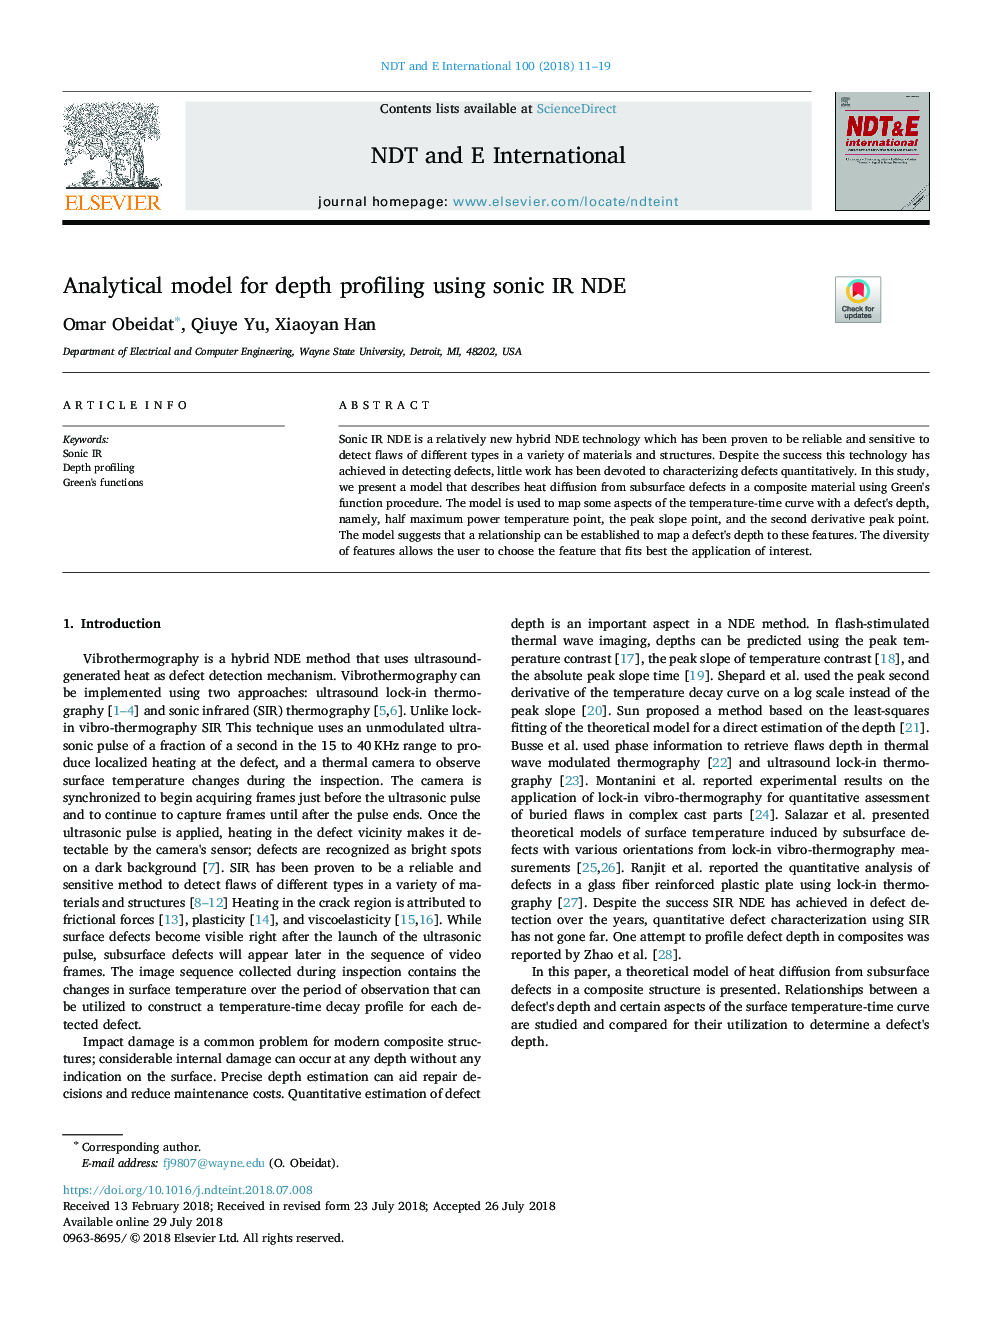 Analytical model for depth profiling using sonic IR NDE